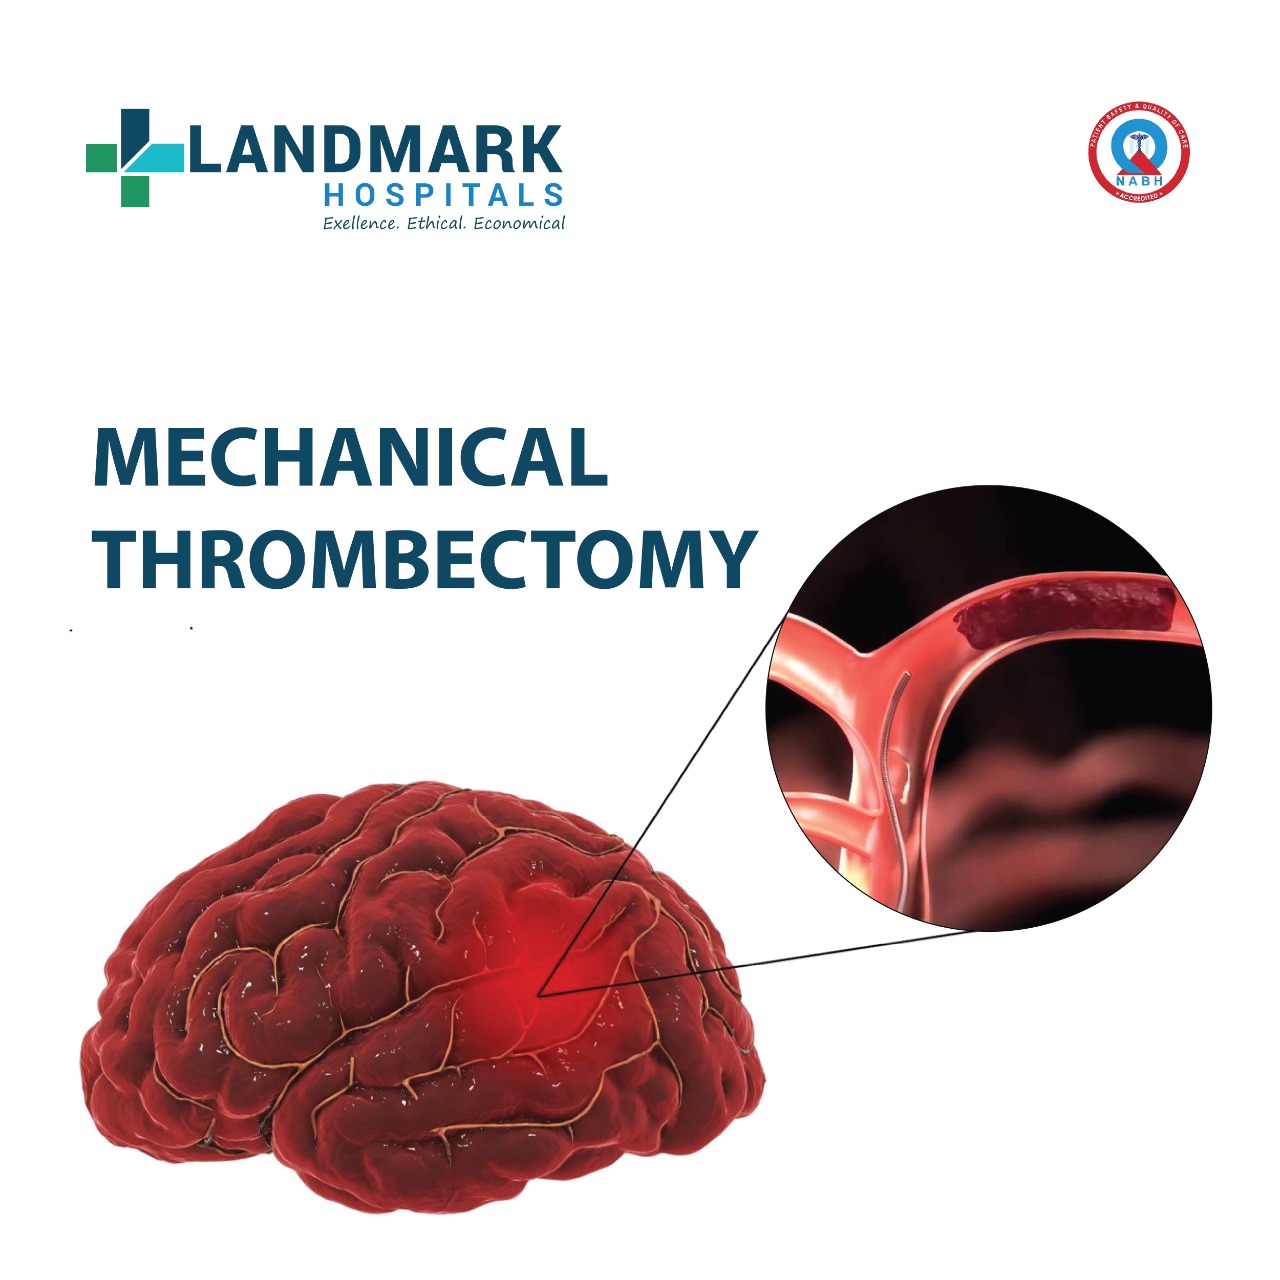 Mechanical thrombectomy explained